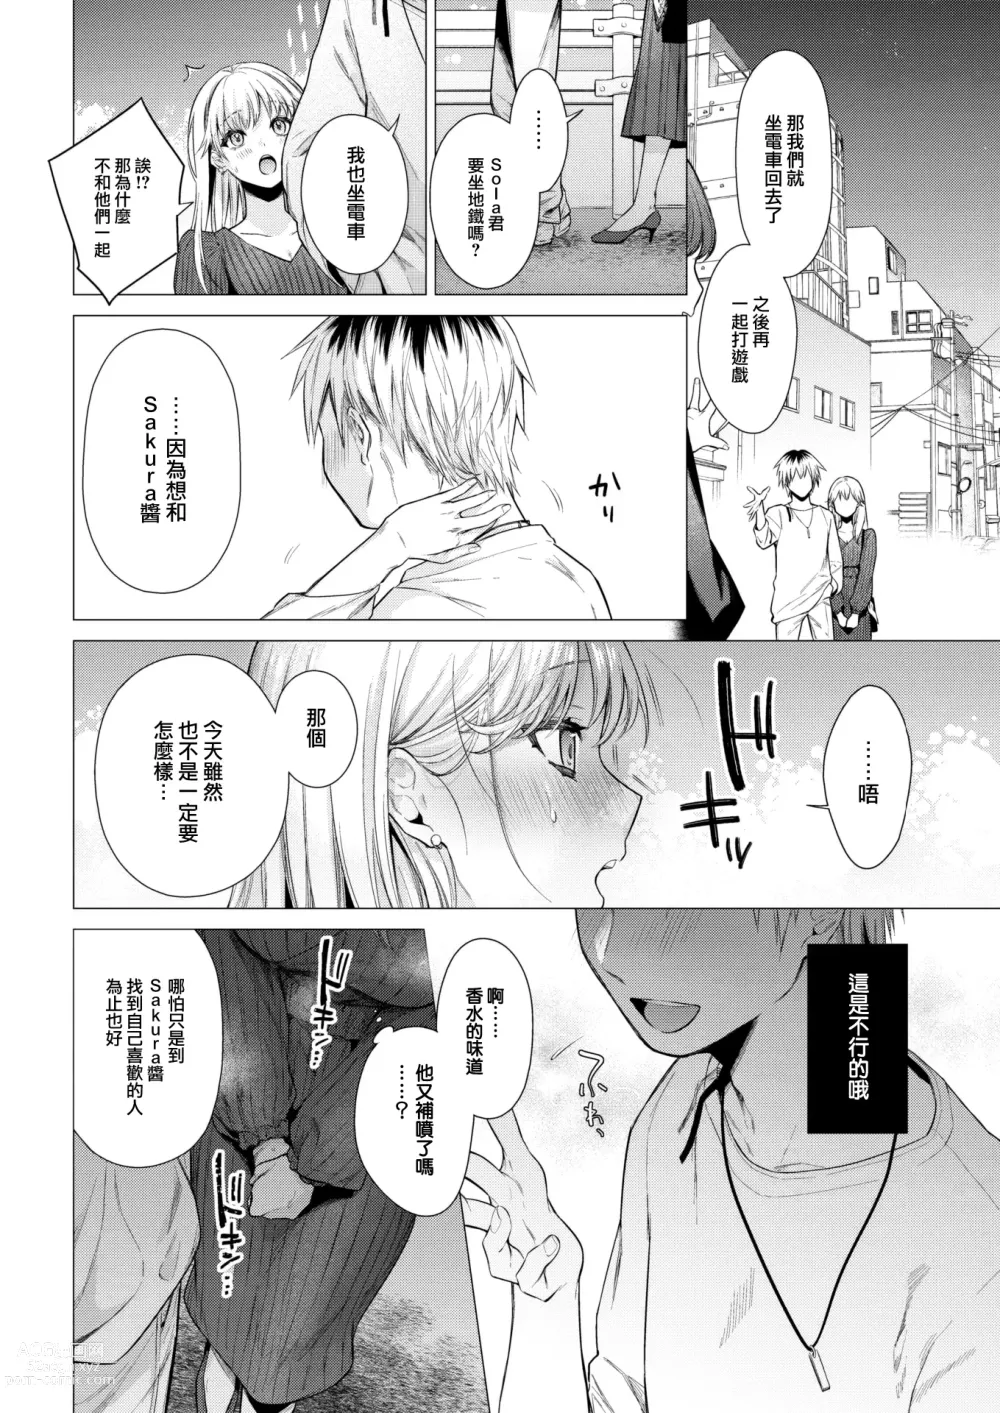 Page 13 of manga Zurukute Gomenne